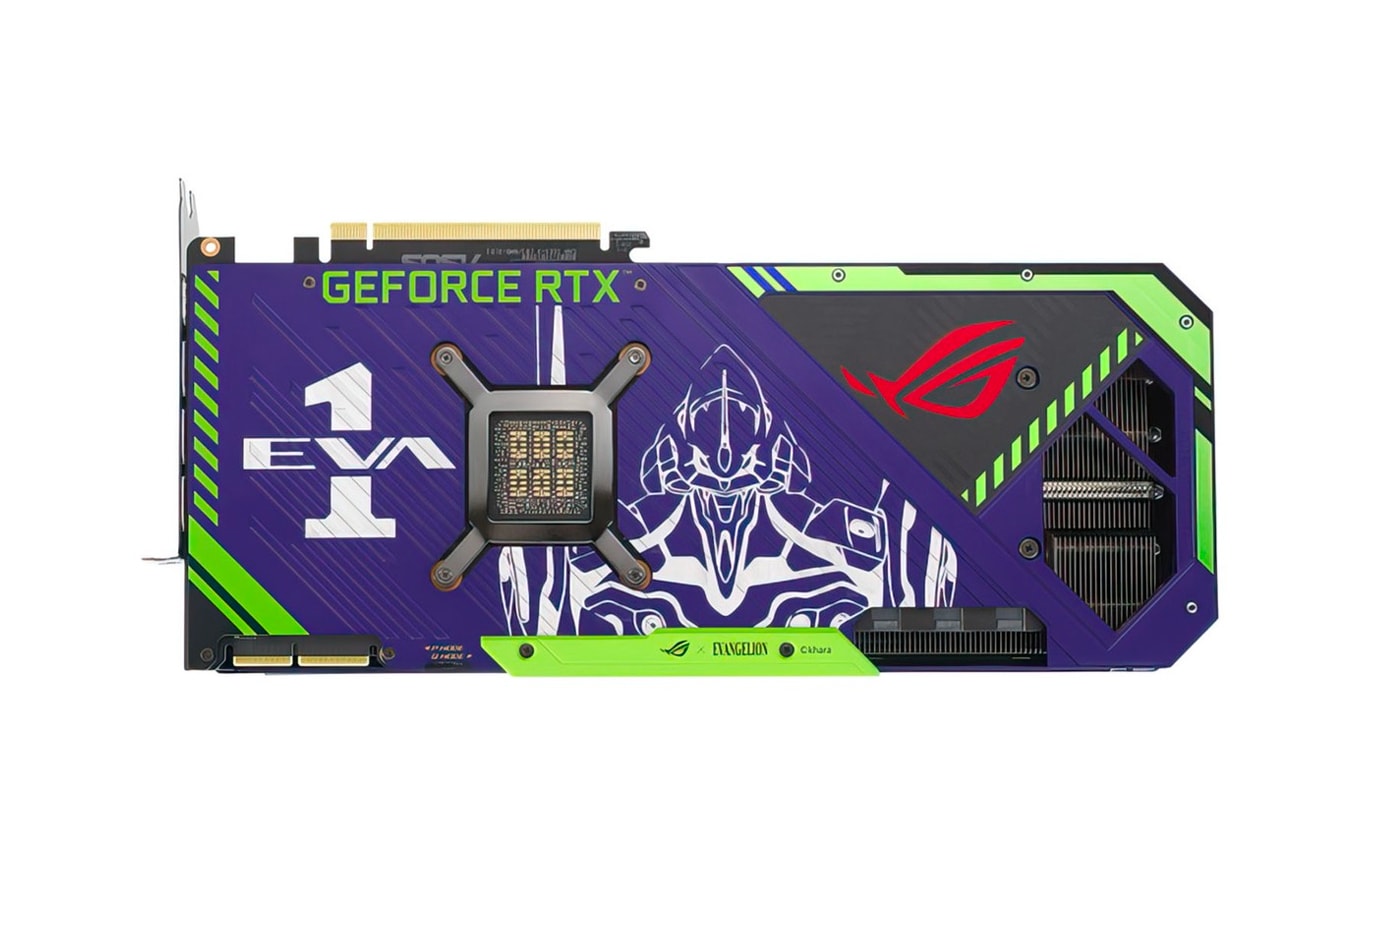 Asus republic of gamers rog evangelion unit 01 purple green ROG MAXIMUS Z690 HERO motherboard ROG STRIX RTX 3090 graphics card release info